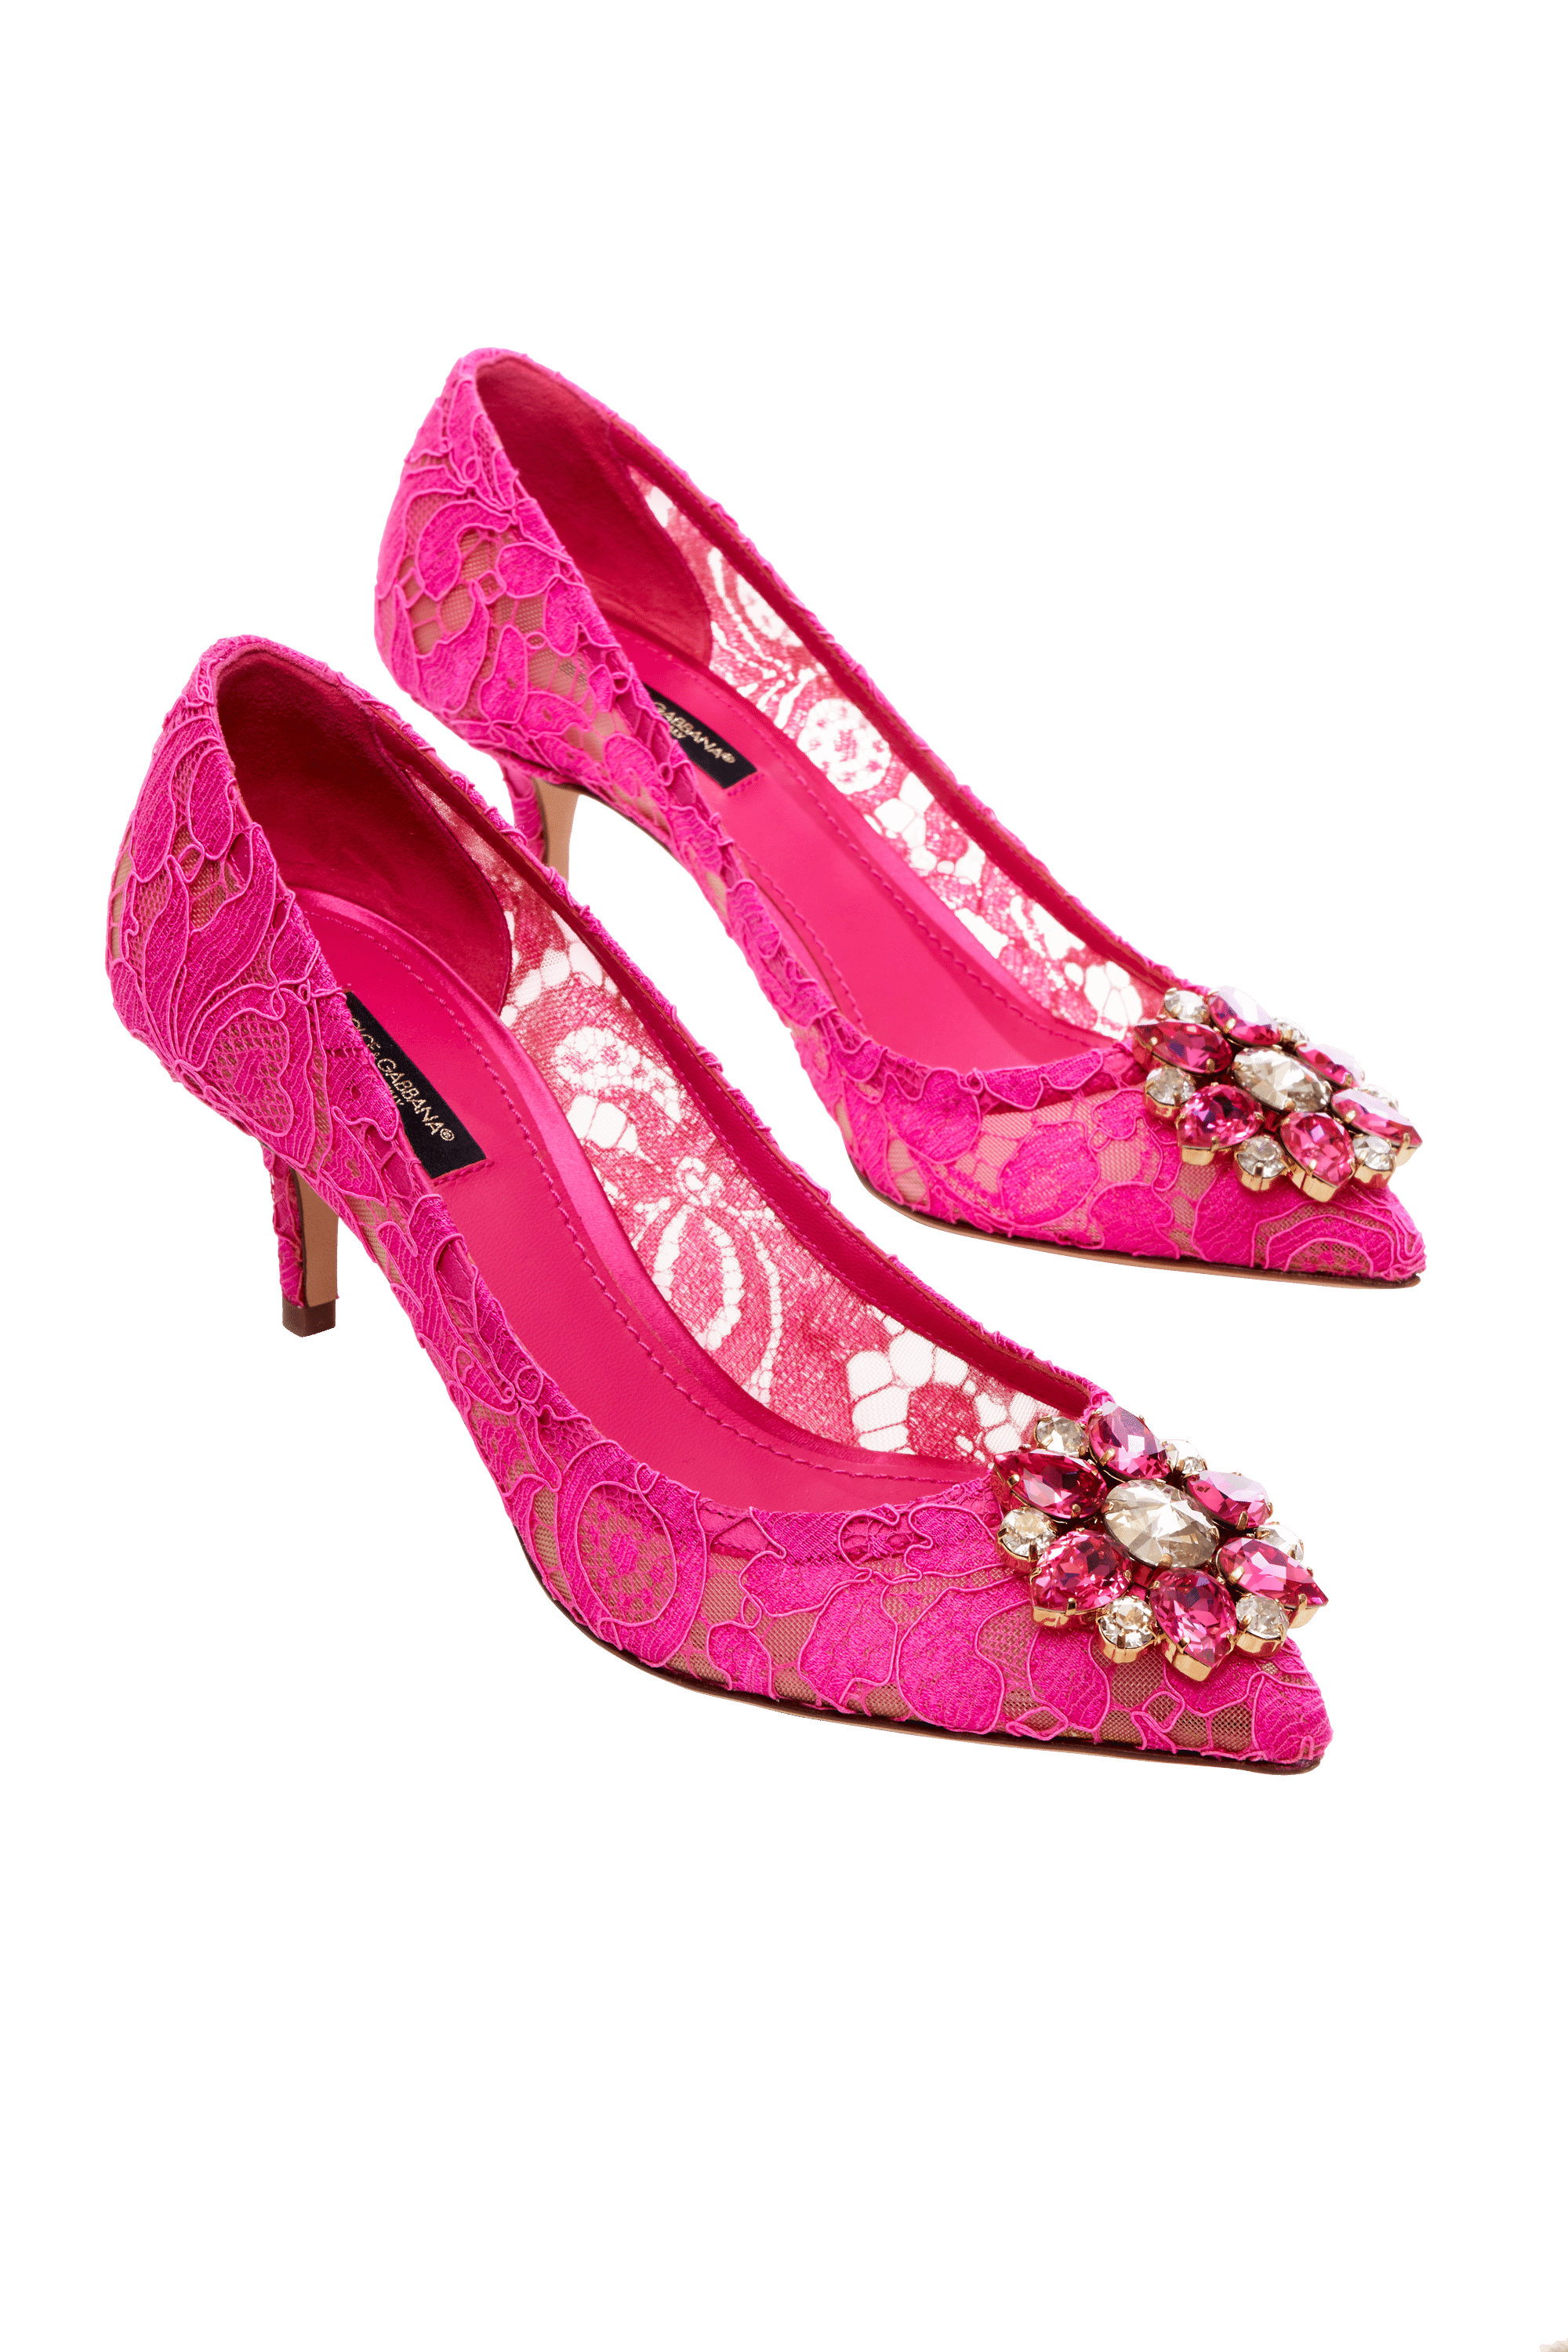 Dolce & Gabbana Pink Lace Pumps 38.5 - Foxy Couture Carmel